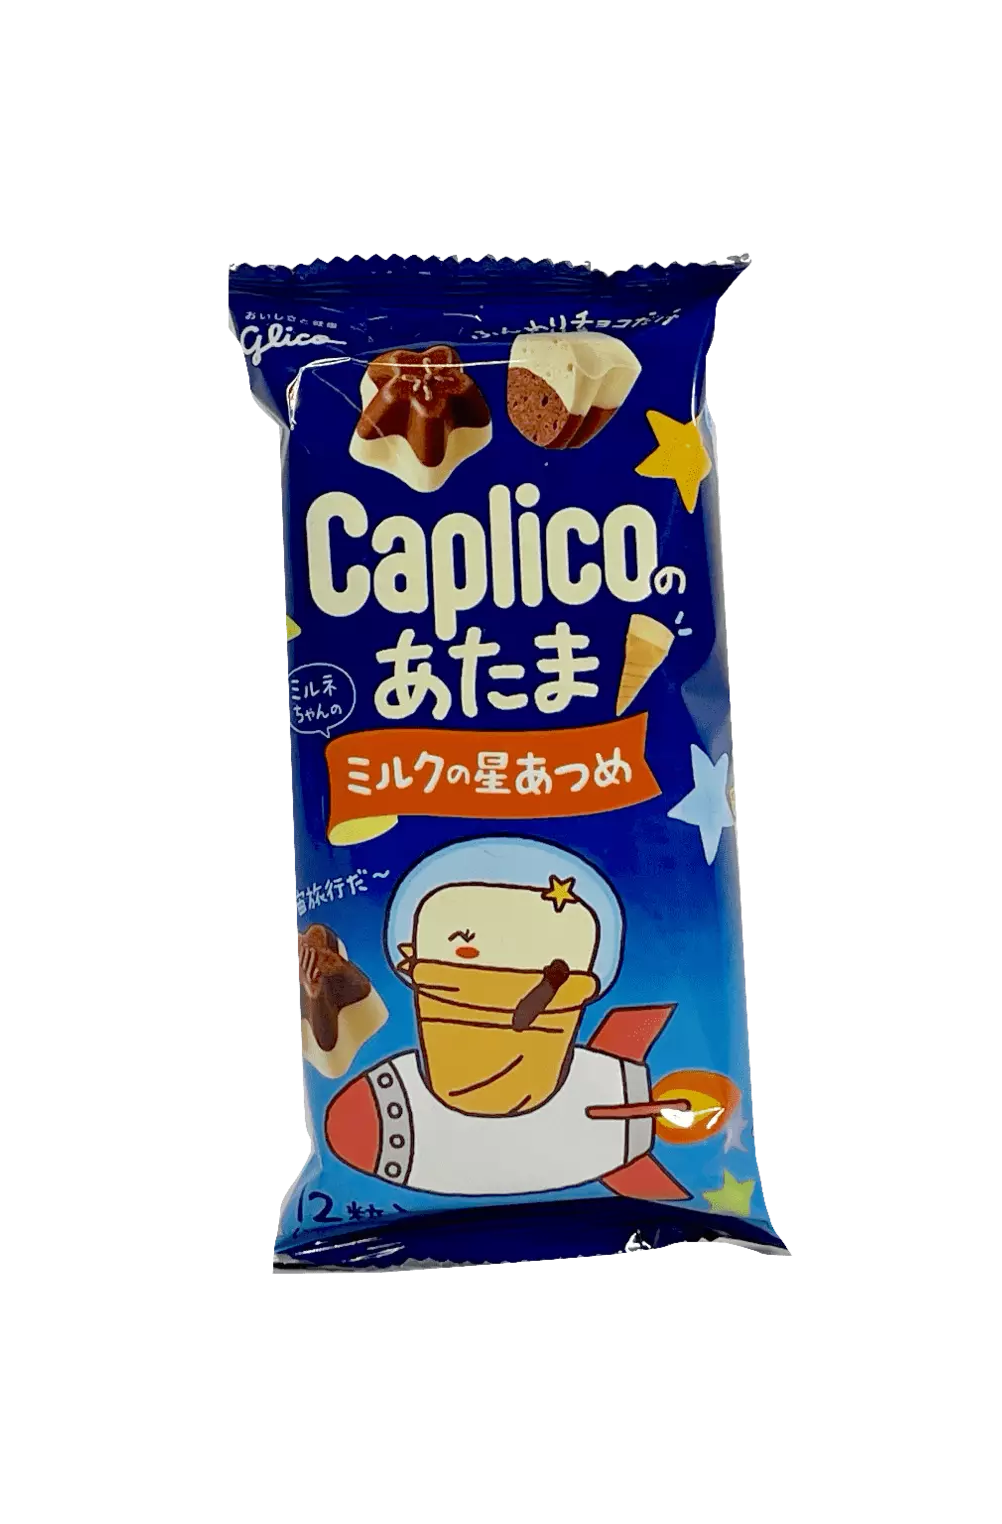 Caplico 星形牛奶双层巧克力 30g Glico 格力高 Japan